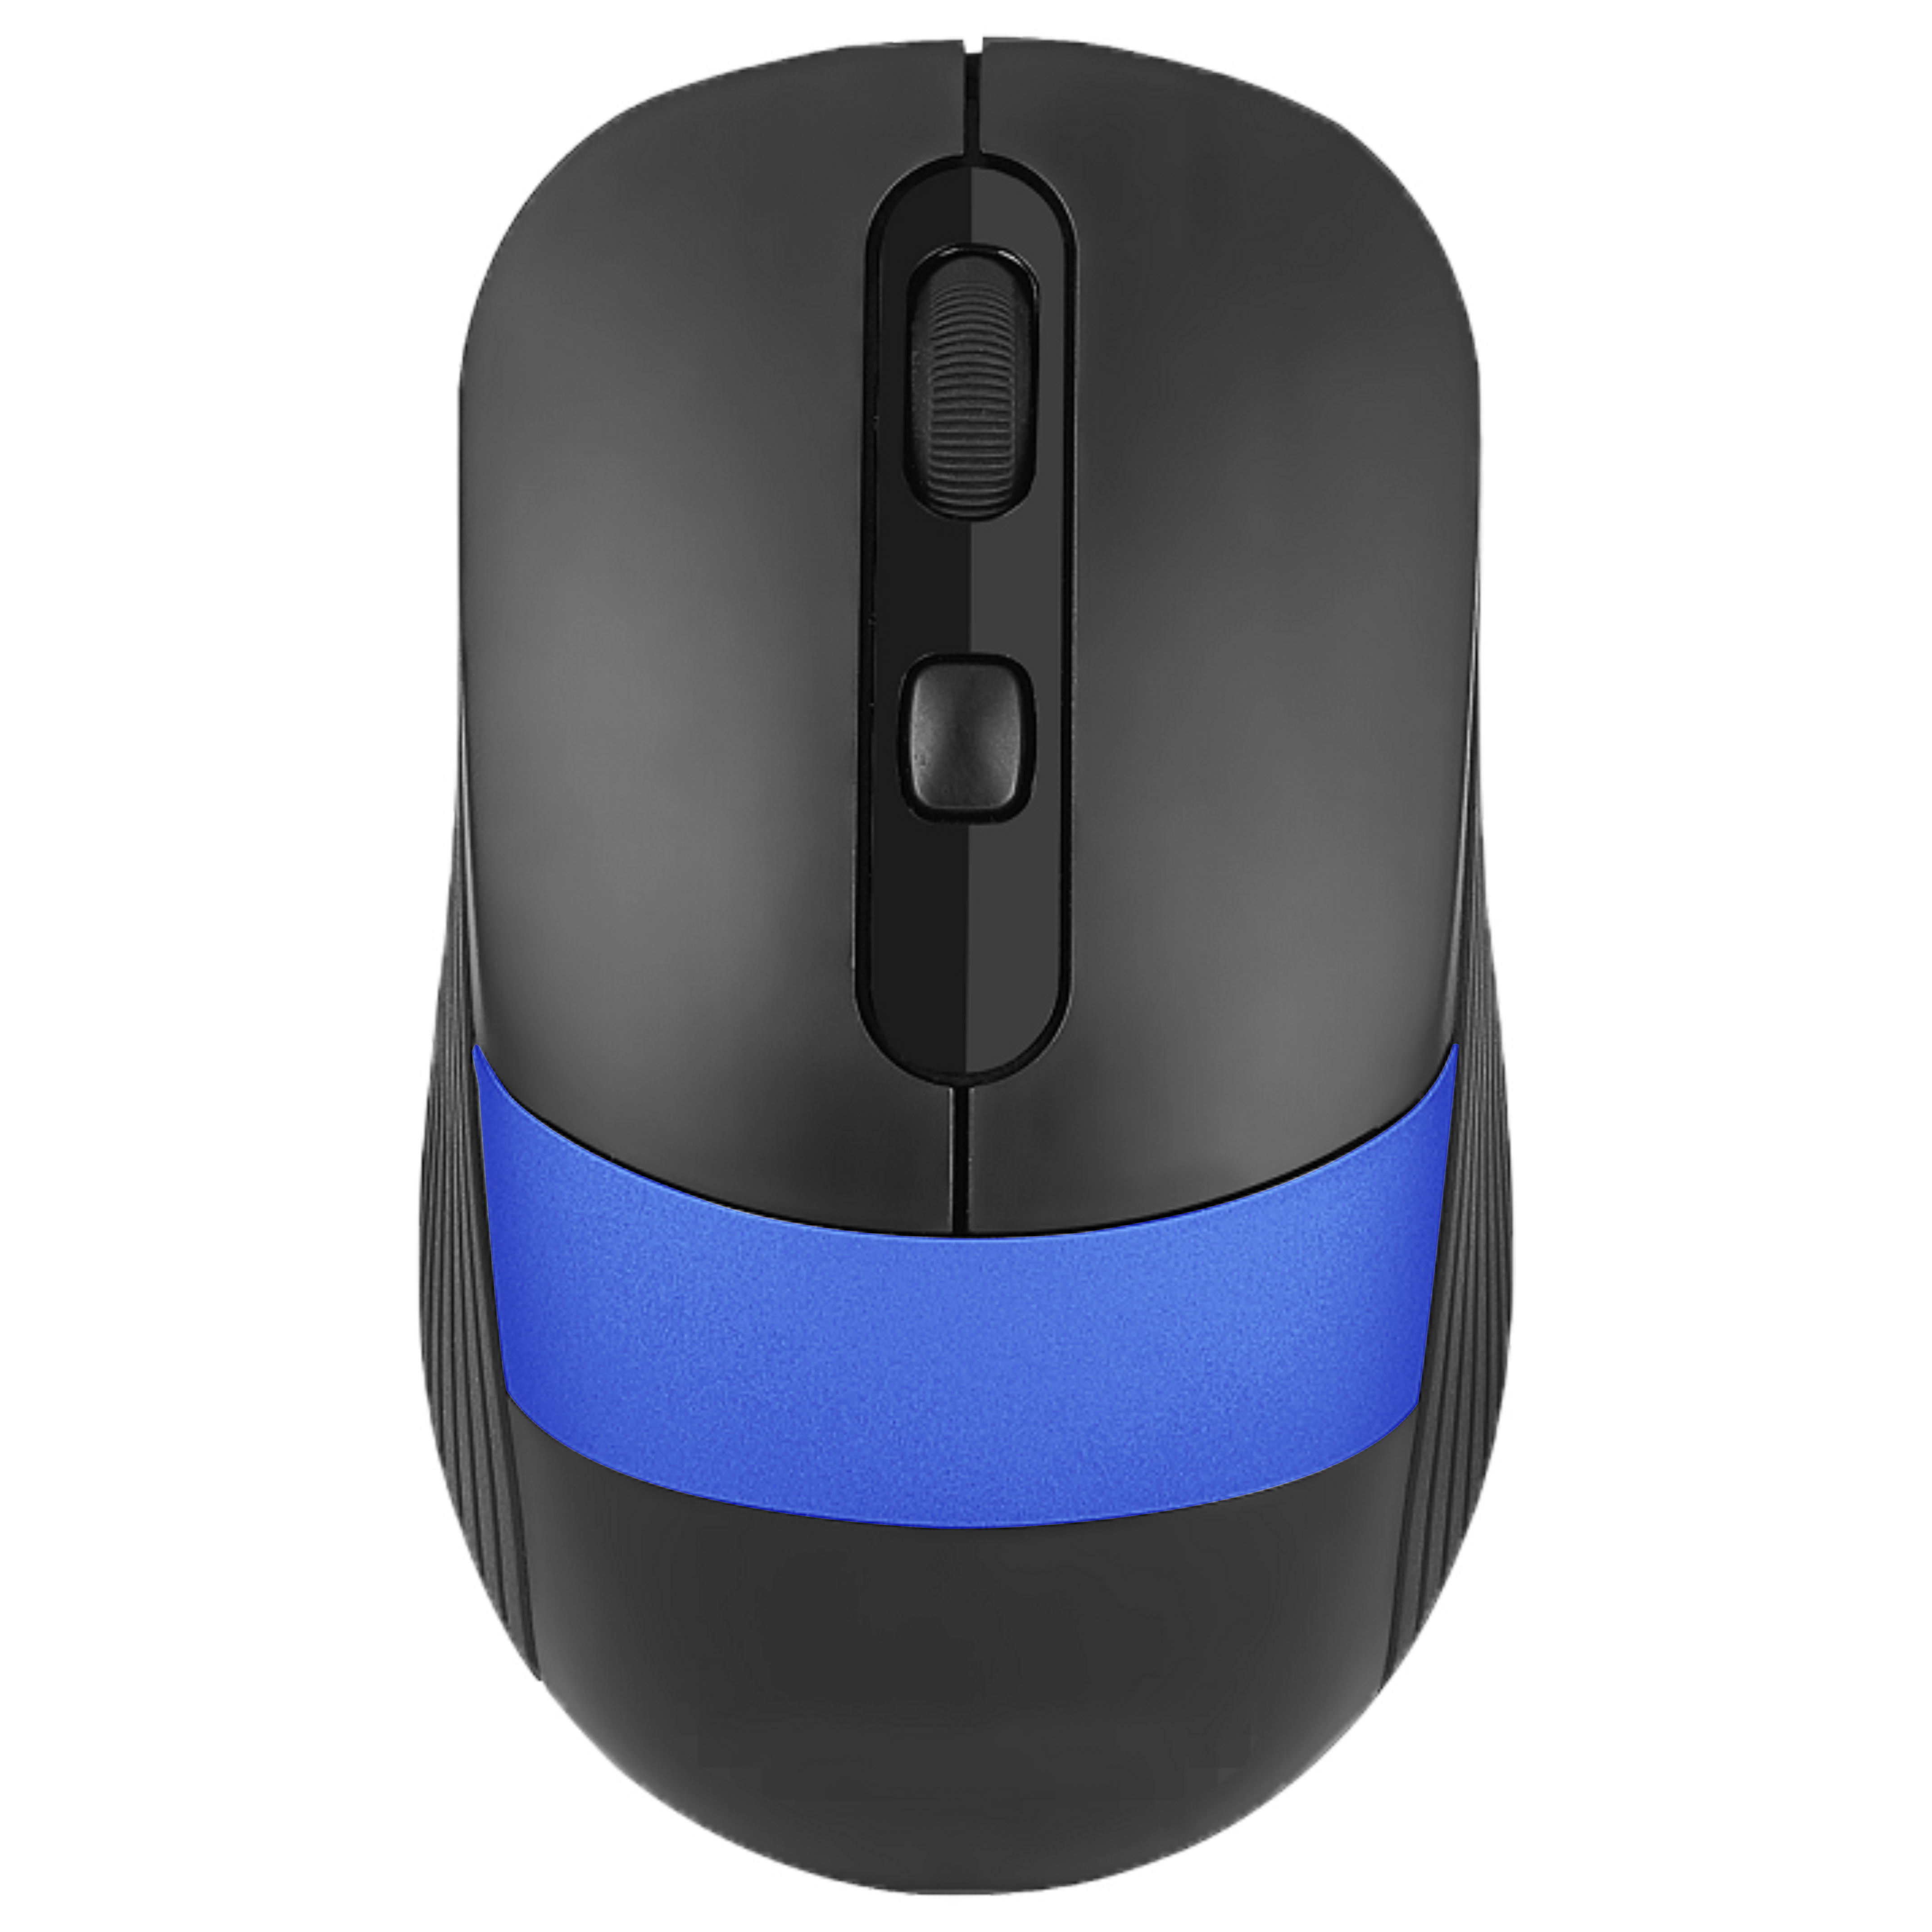 Aptech W-63 Wireless Mouse